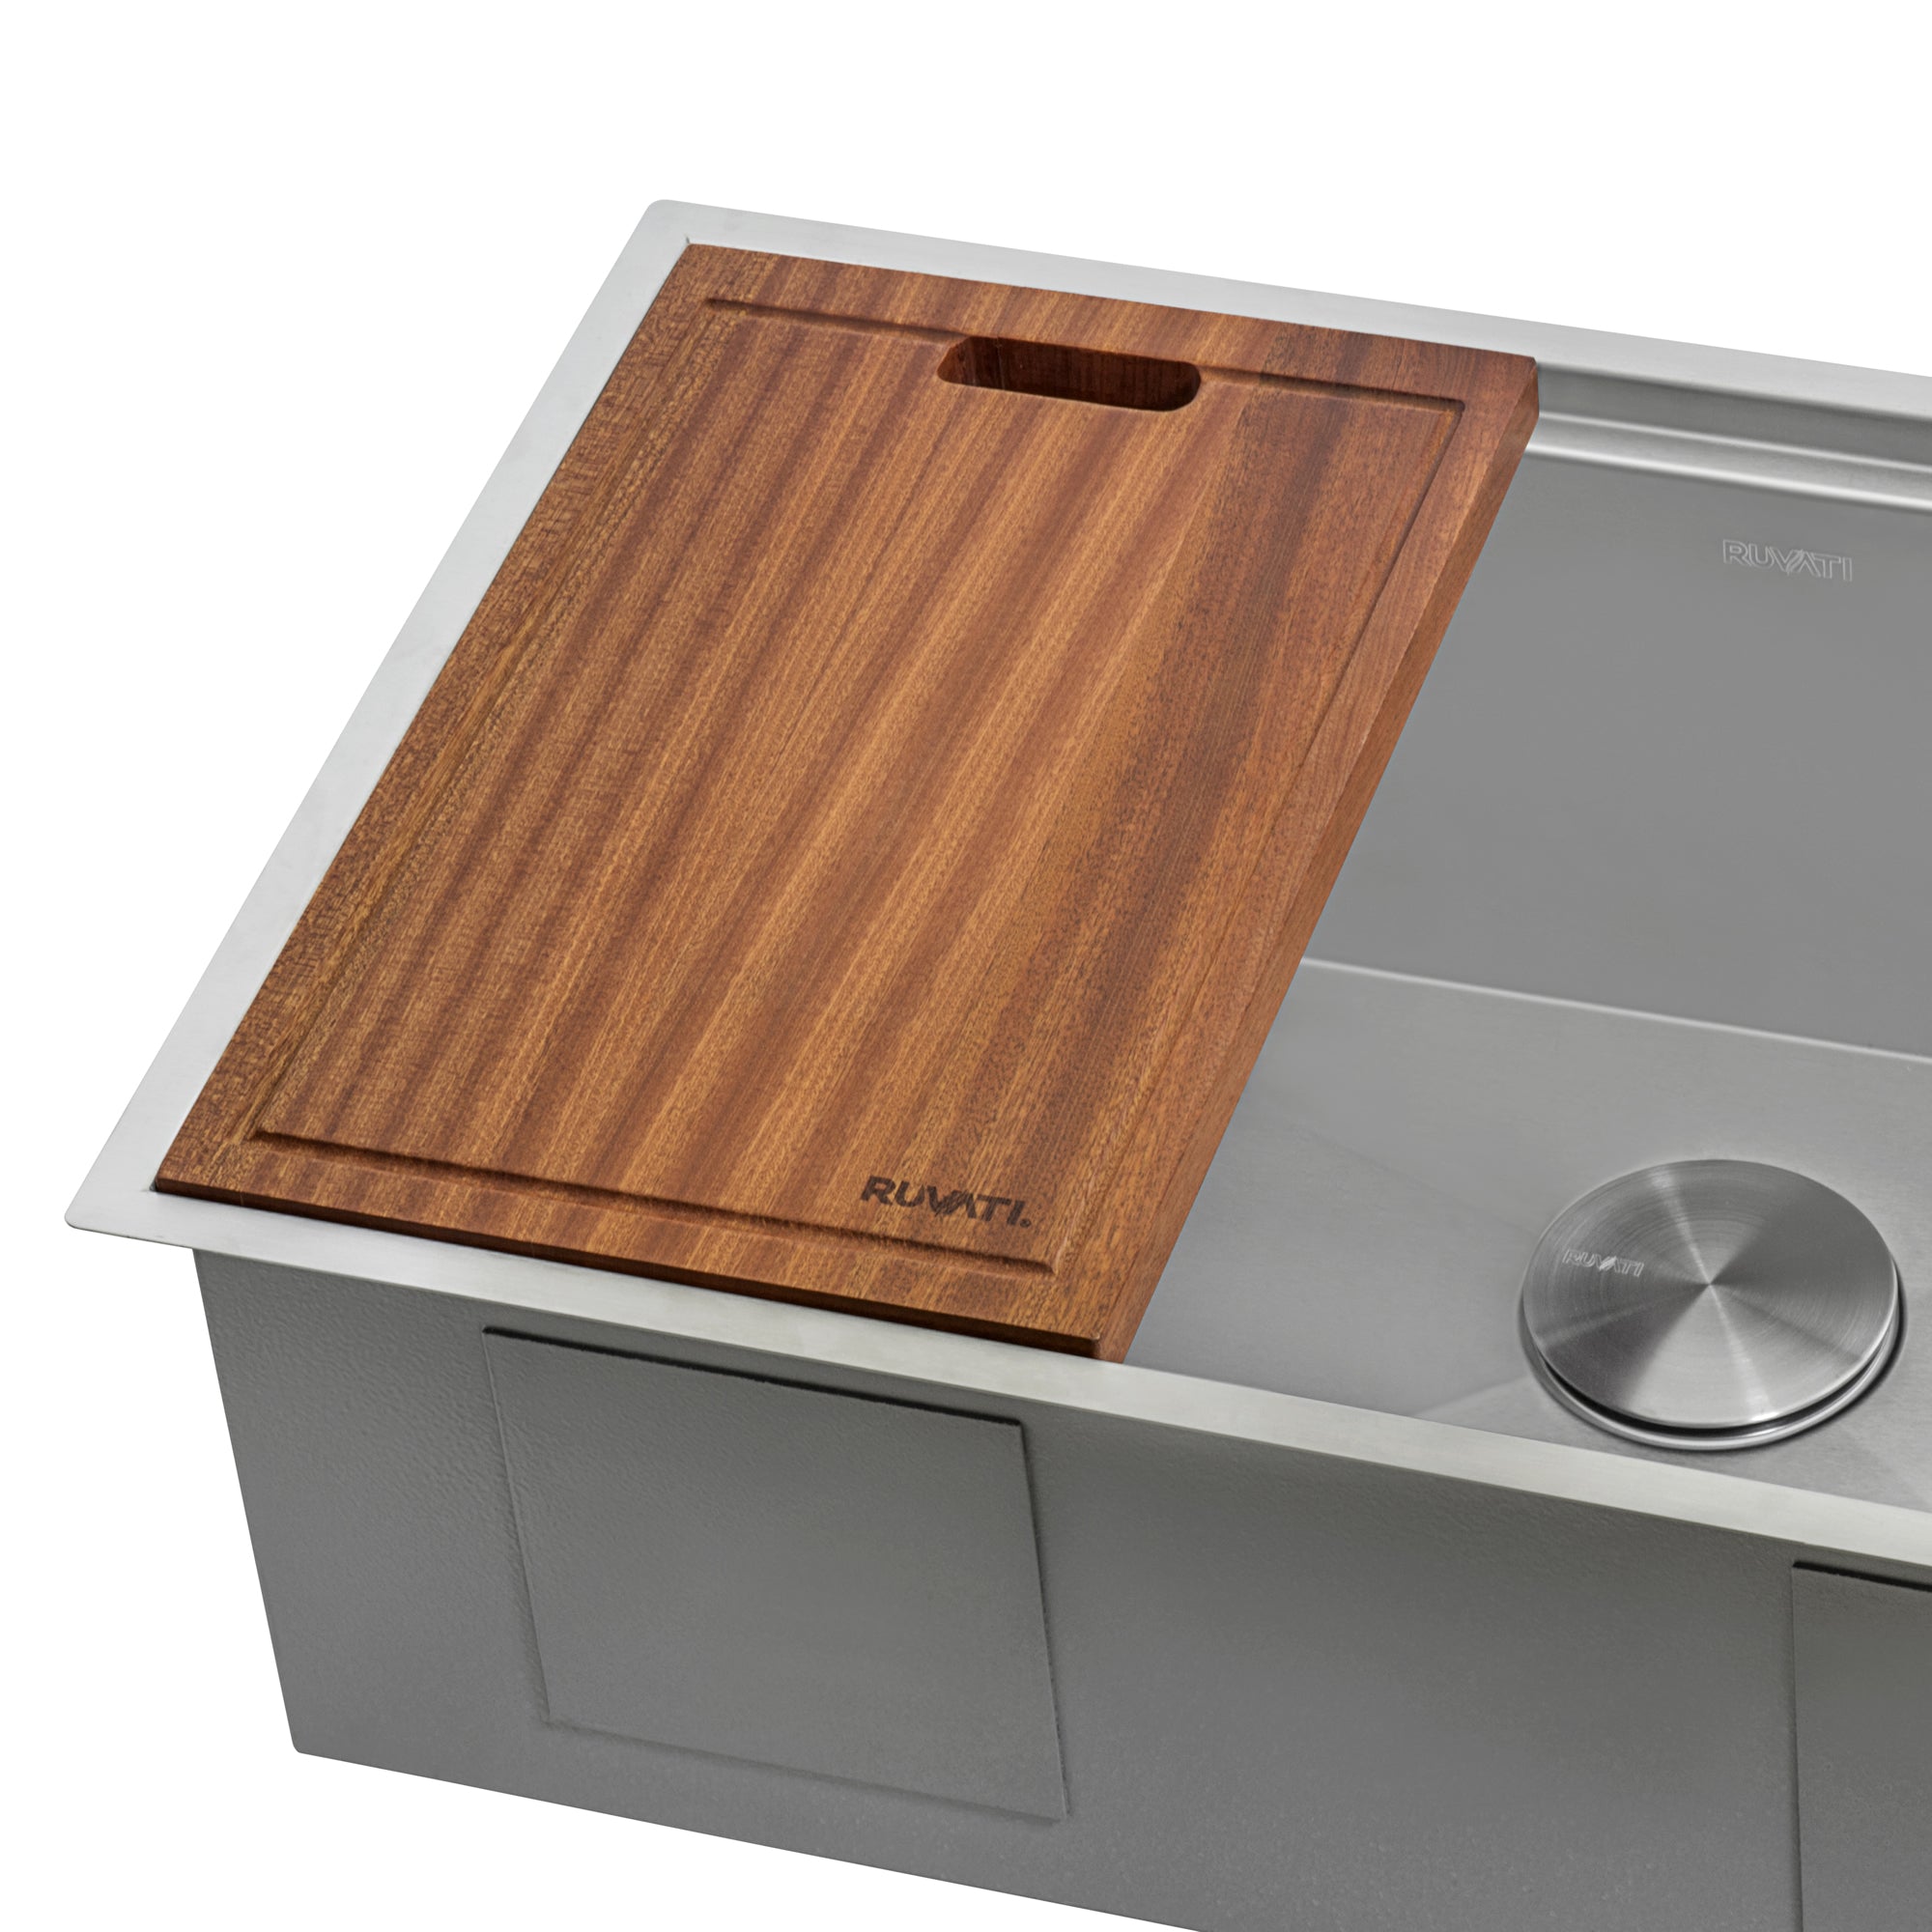 Ruvati 11 x 17 inch Solid Wood Cutting Board for Ruvati Workstation Sinks – RVA1217